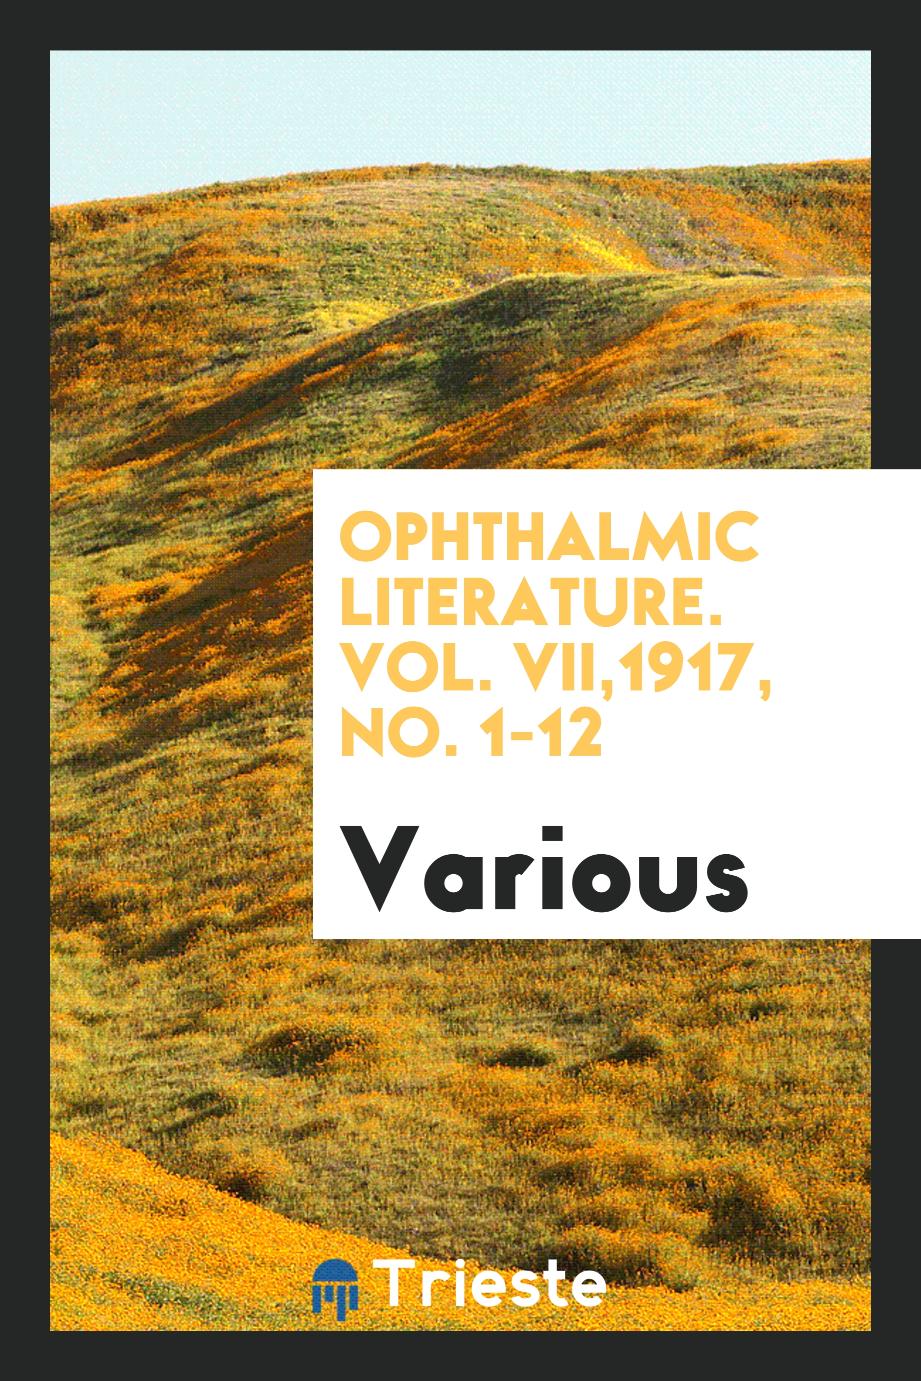 Ophthalmic Literature. Vol. VII,1917, No. 1-12